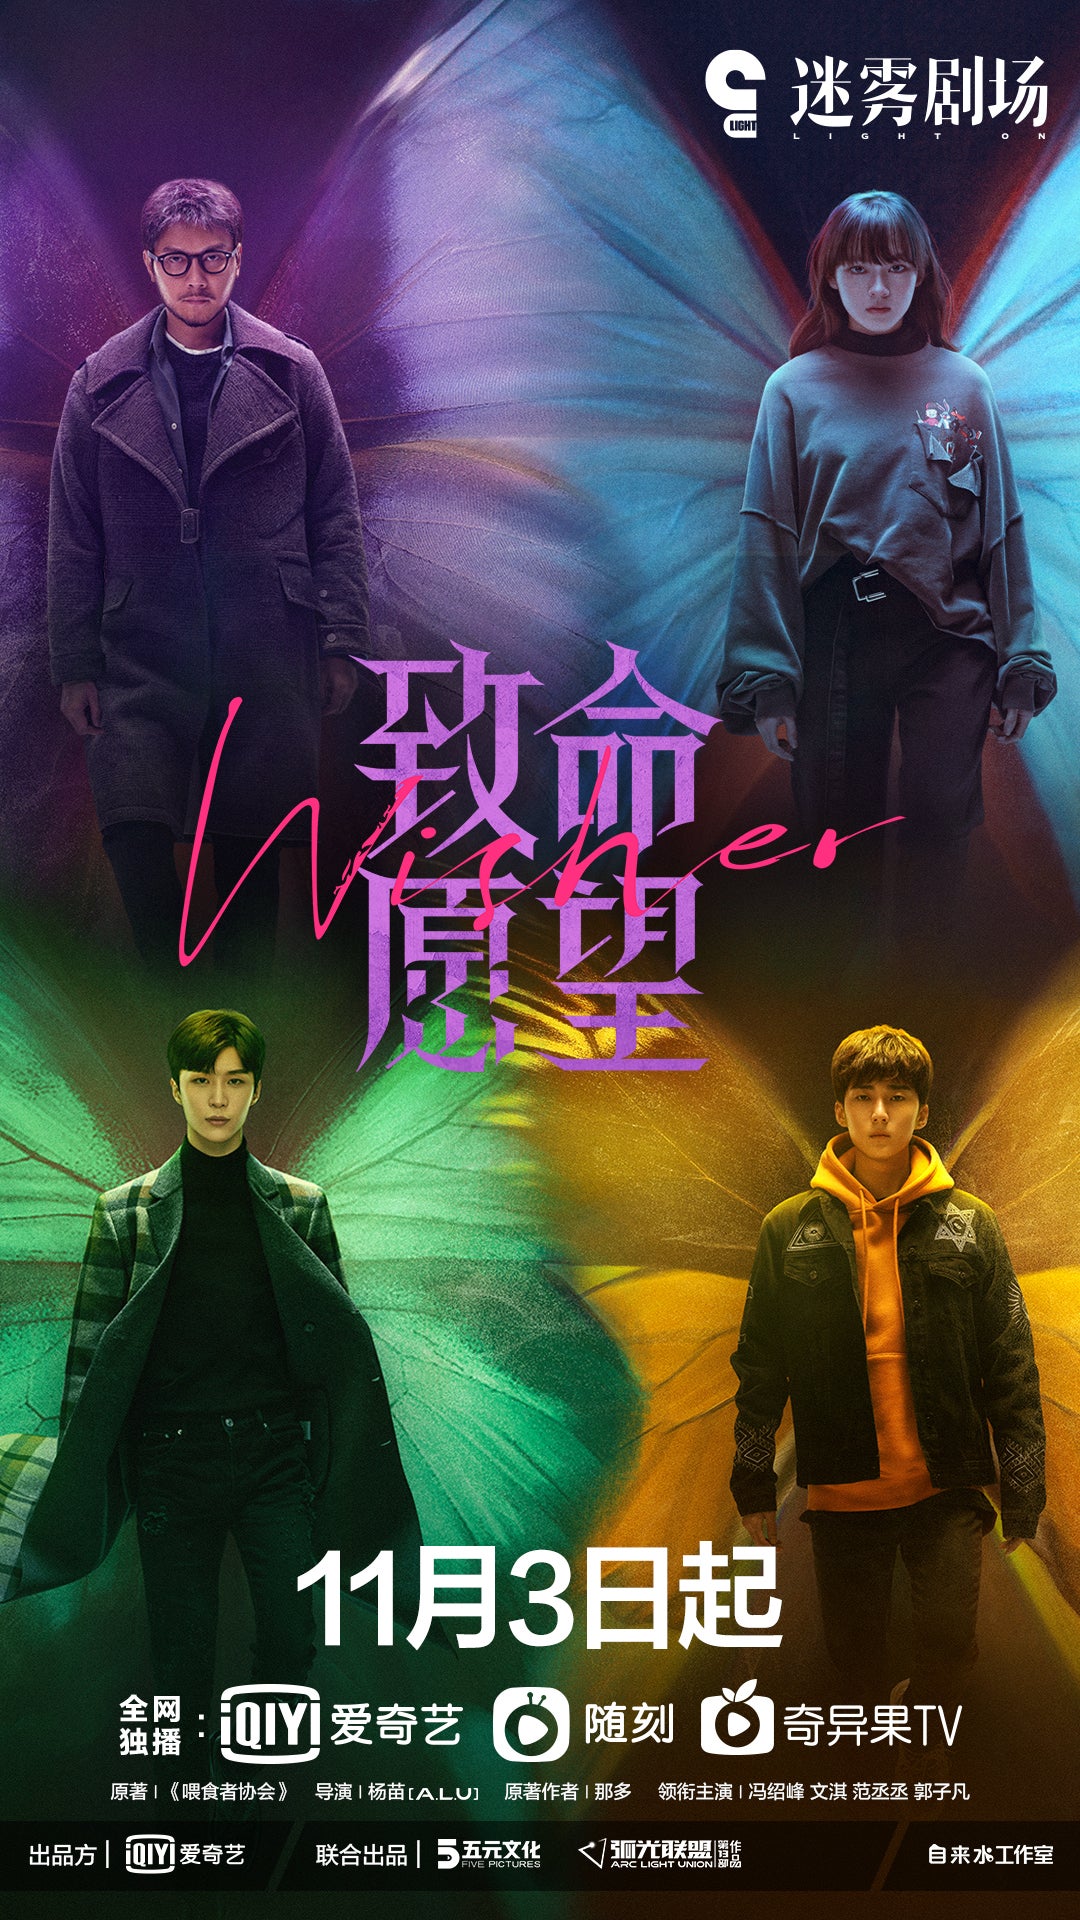 TV ratings for Zhi Ming Yuan Wang (致命愿望) in the United Kingdom. iqiyi TV series